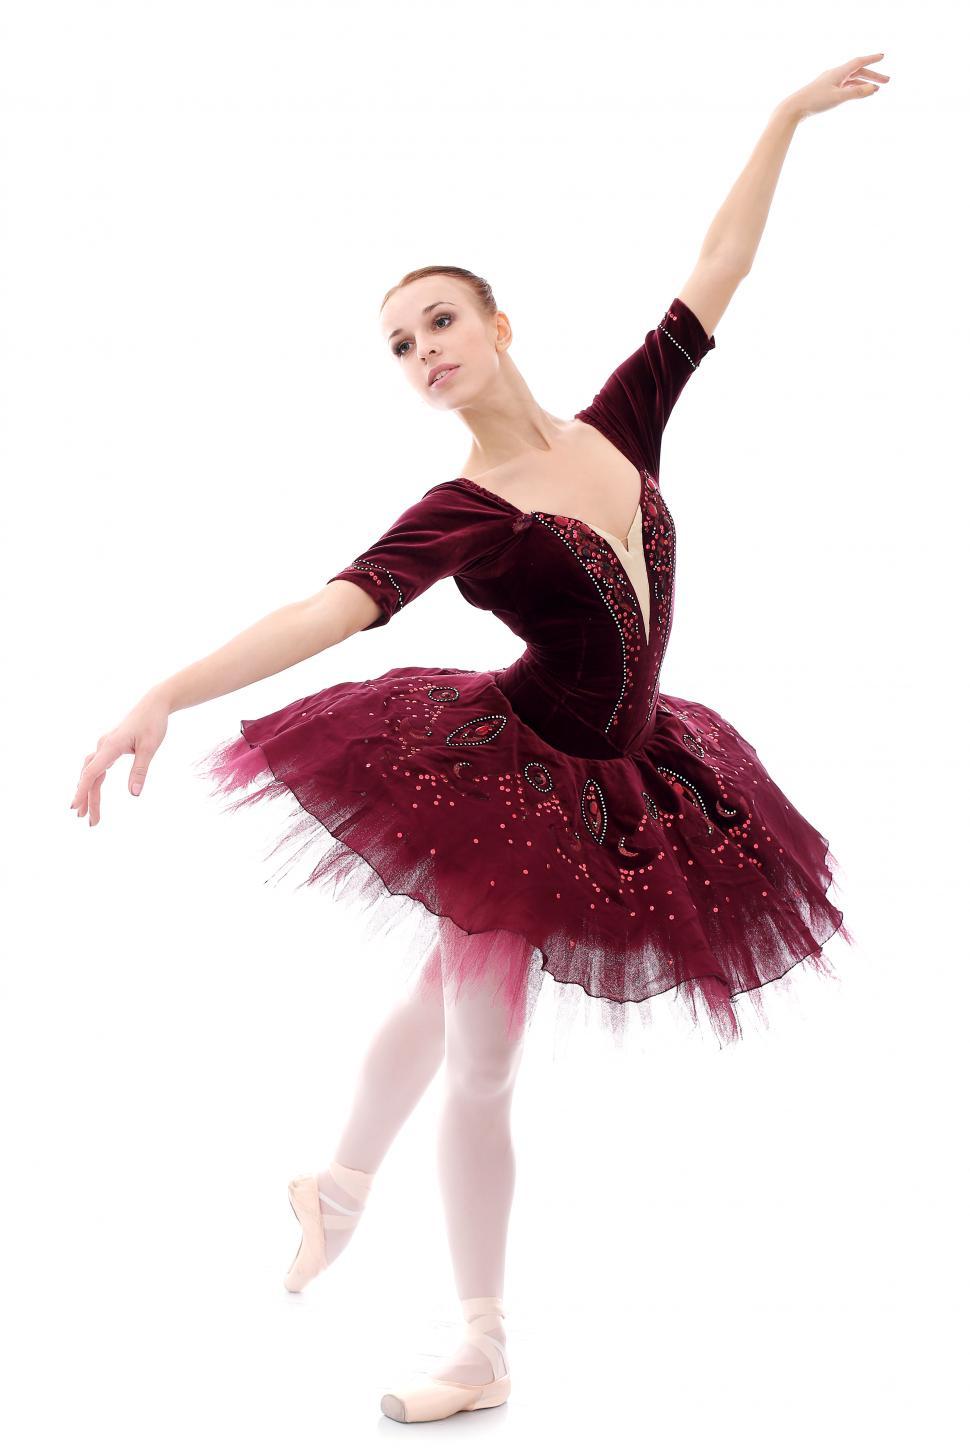 Download Free Stock Photo of Beautiful ballerina performing ballet 